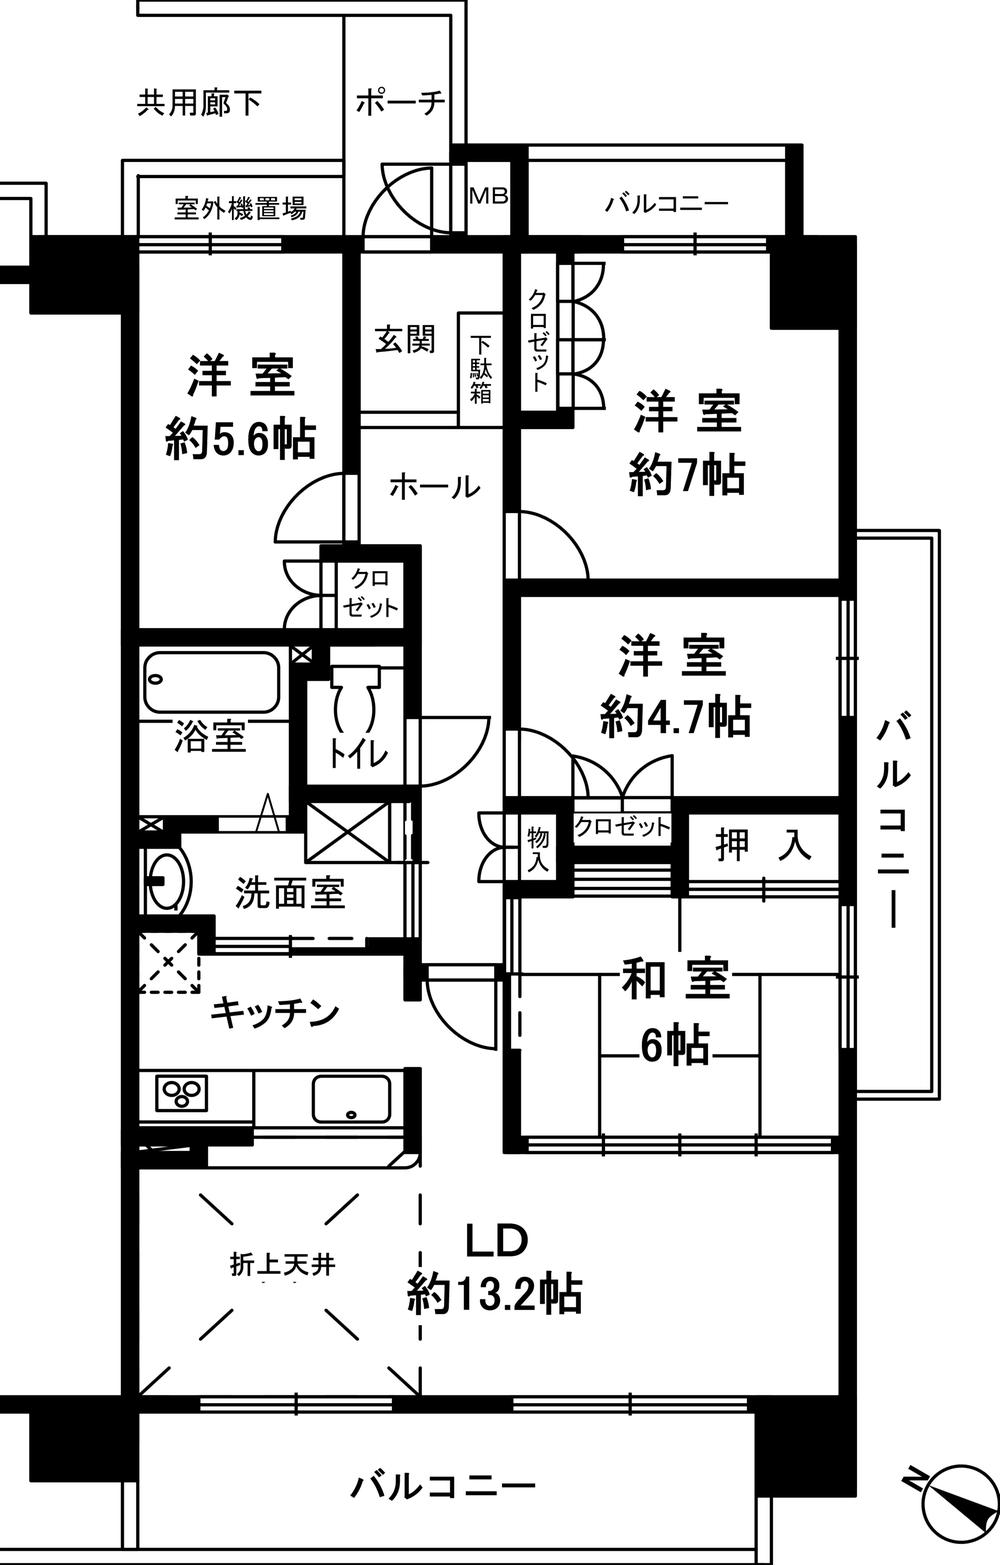 Floor plan. 4LDK, Price 24.5 million yen, Occupied area 89.66 sq m , Balcony area 18.29 sq m